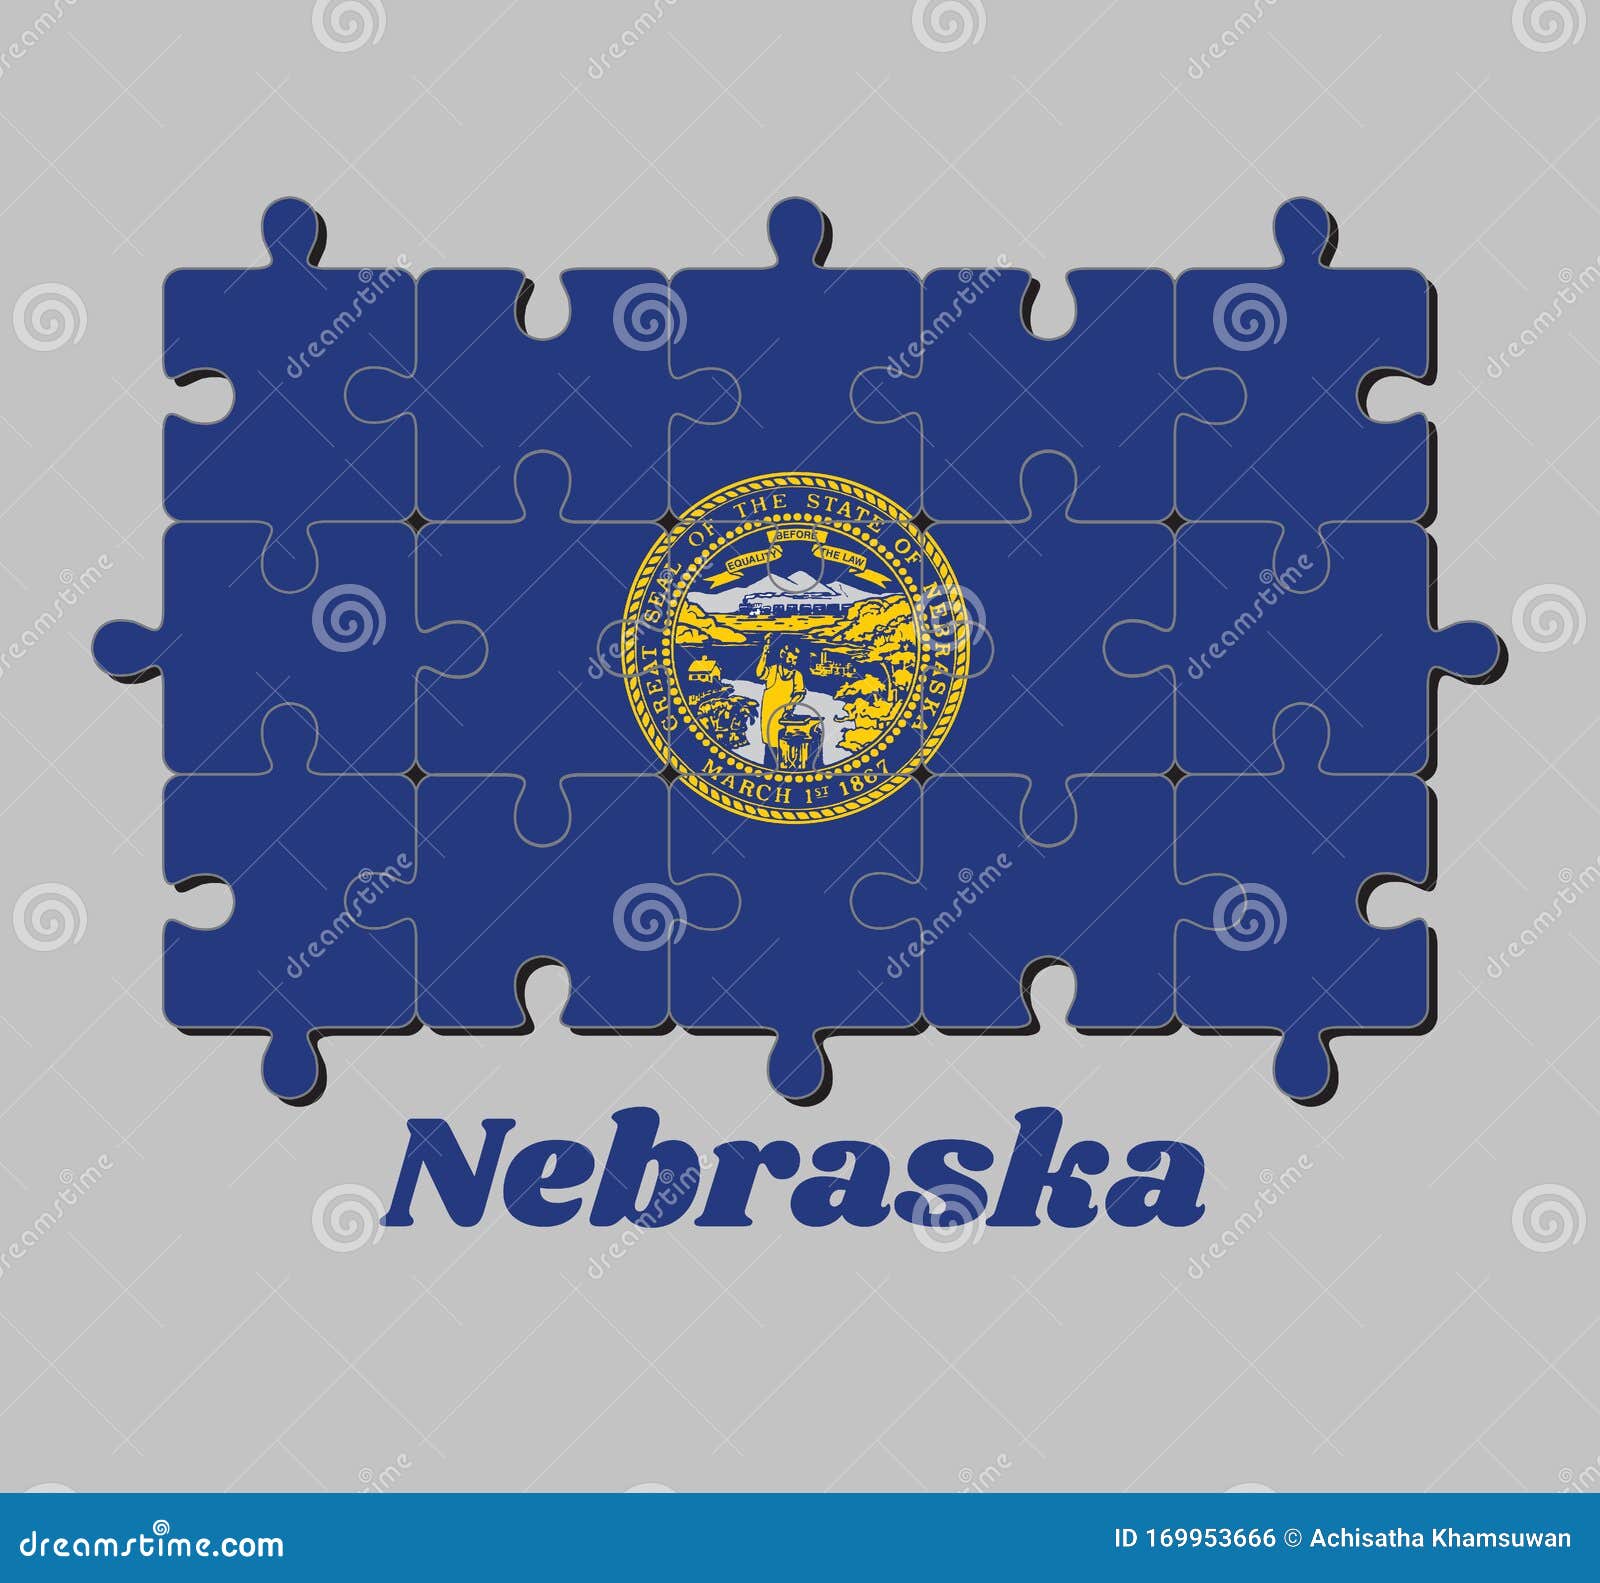 Jigsaw Puzzle Of Nebraska Flag And The State Name Seal Of Nebraska In